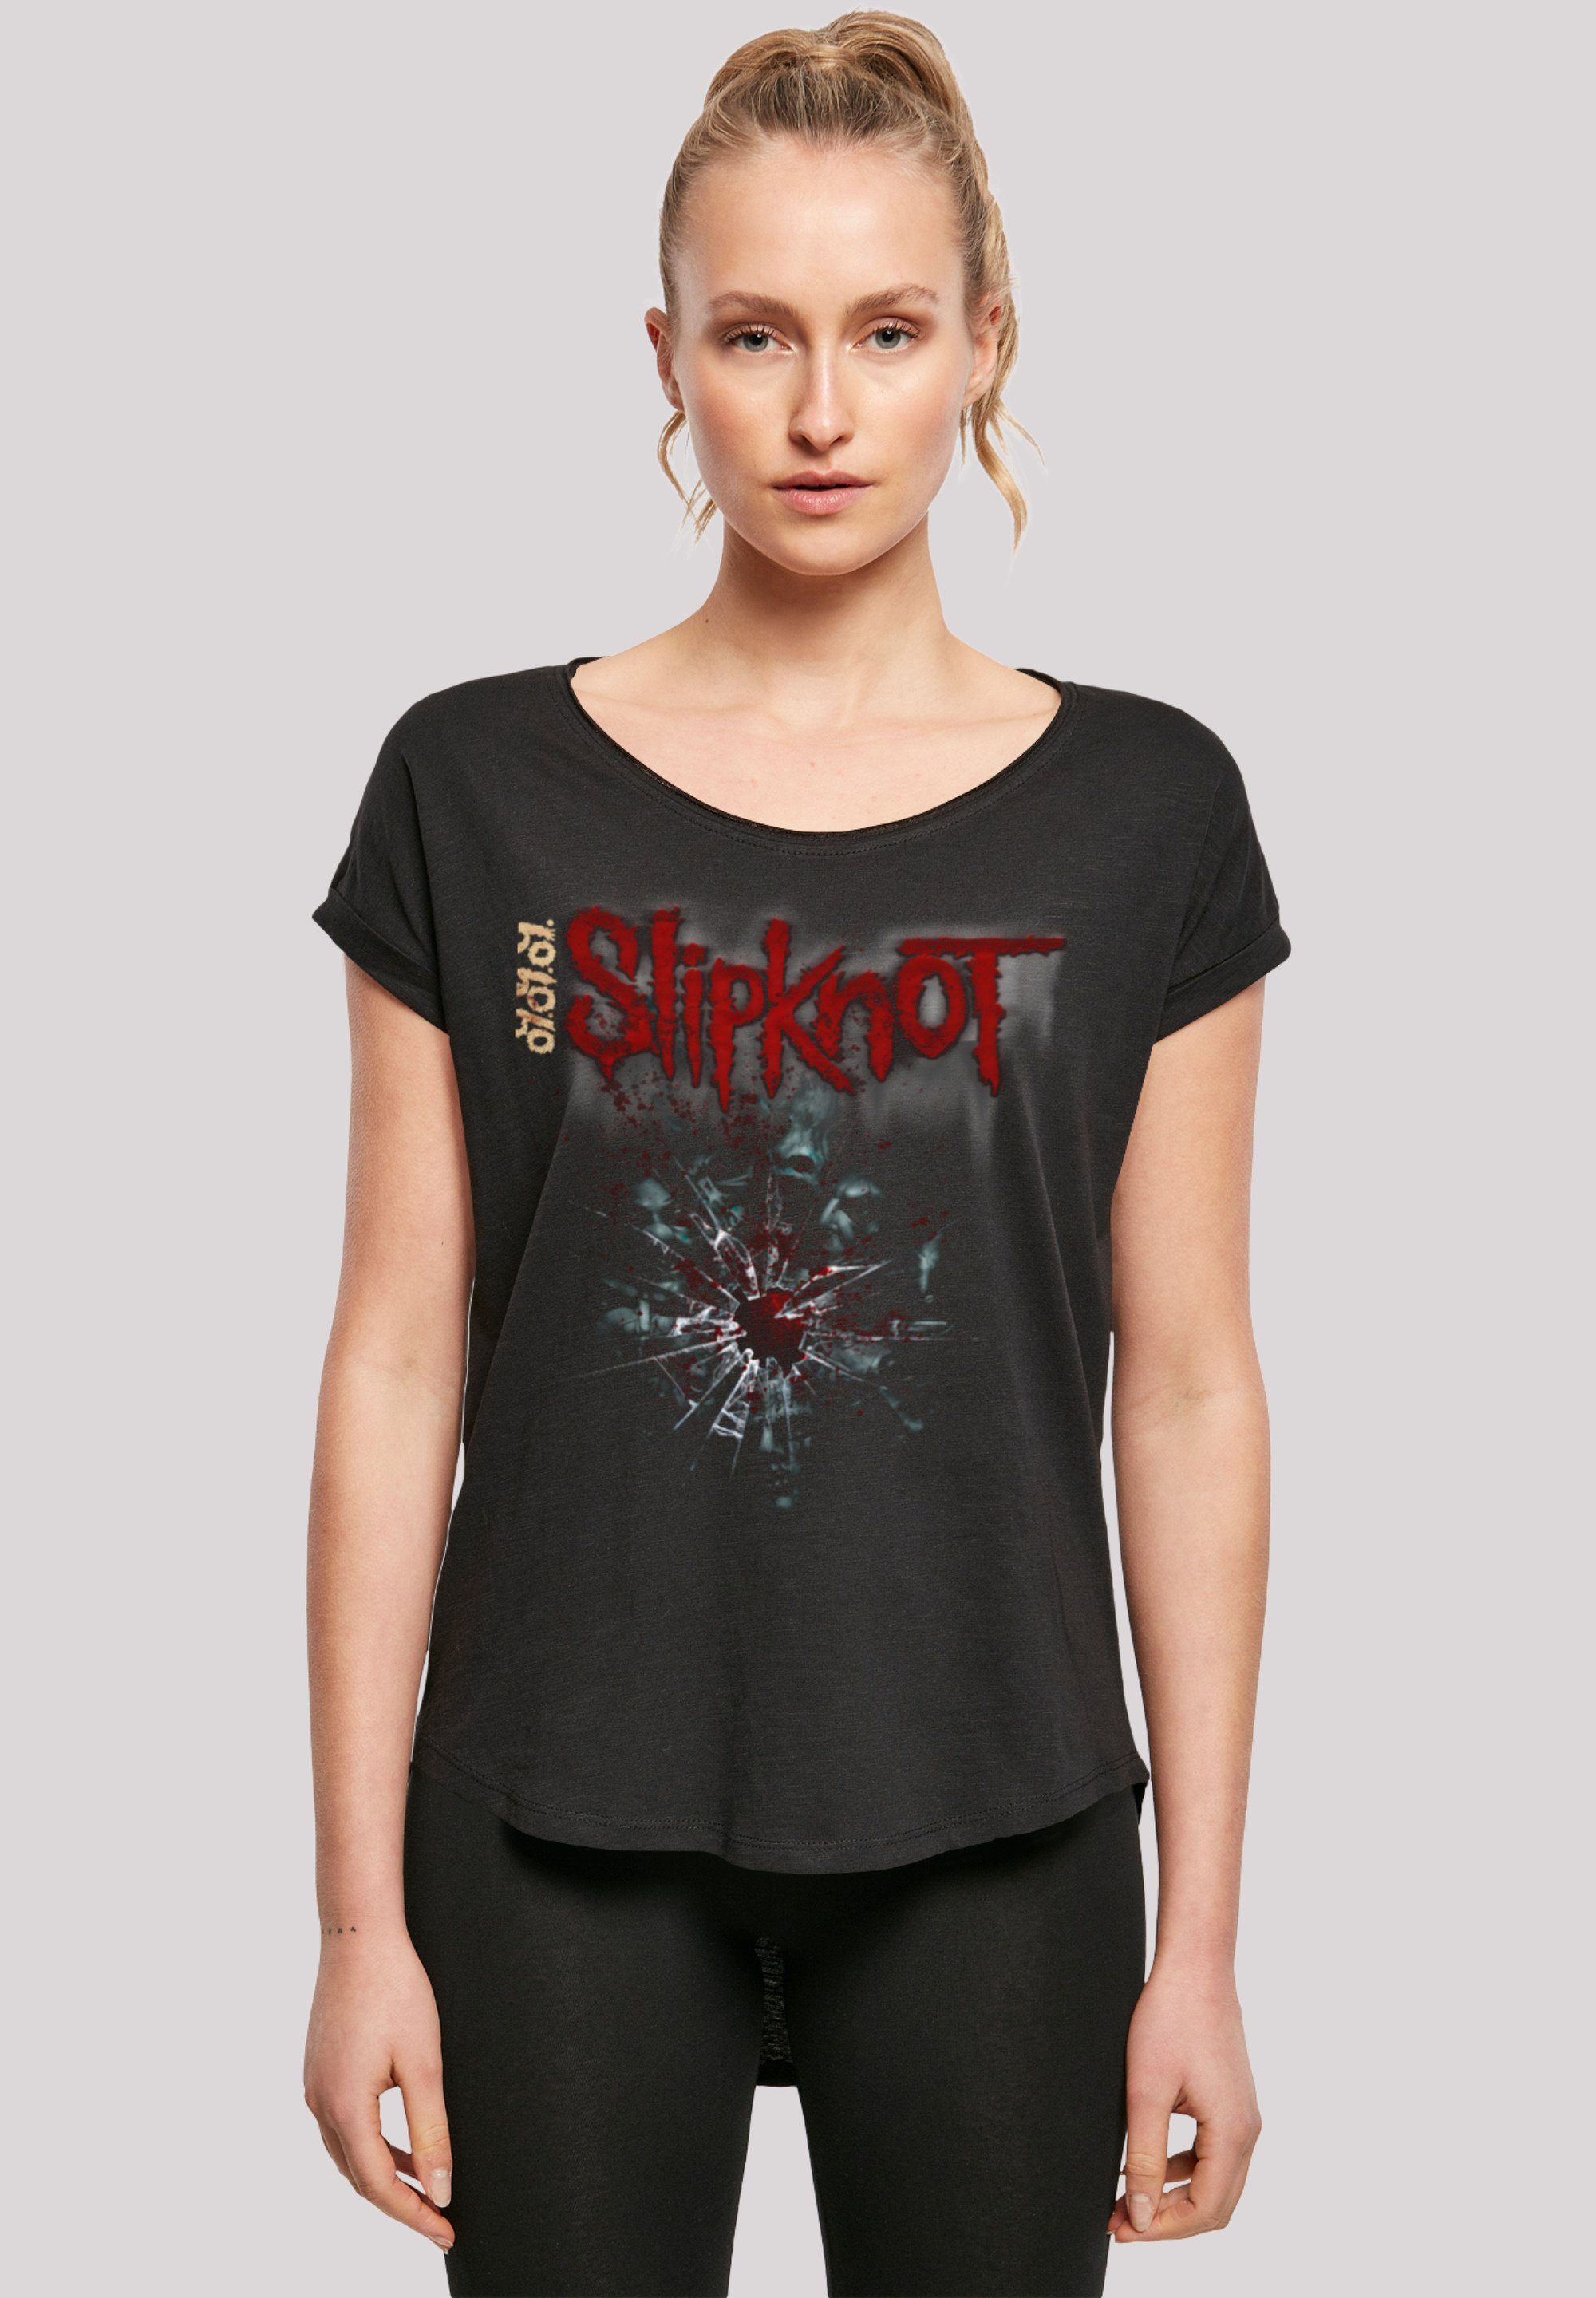 F4NT4STIC T-Shirt Slipknot Metal Band Print | T-Shirts